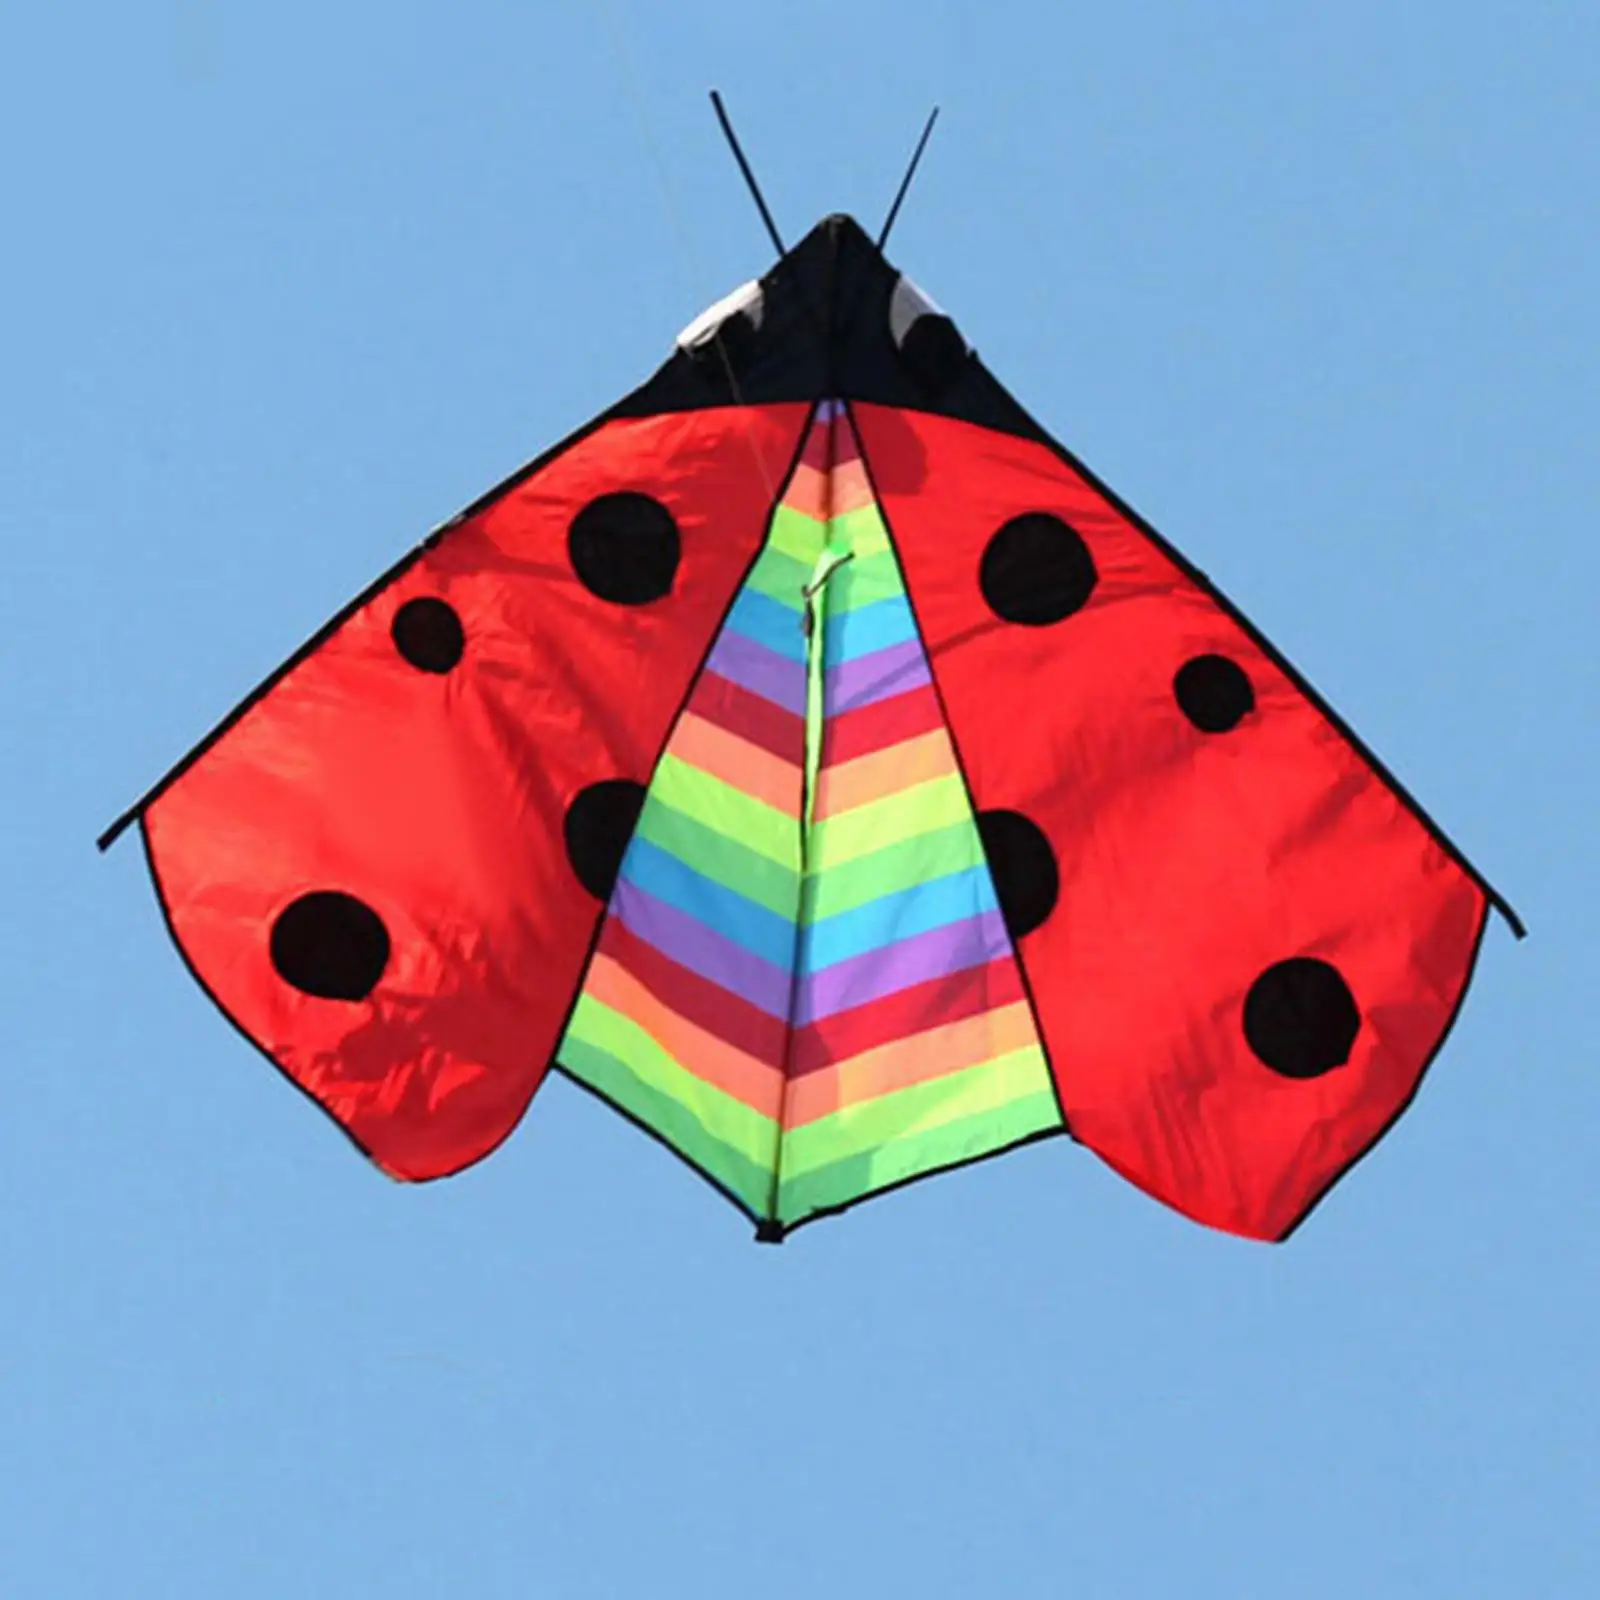 Large Triangle Ladybug Kite Fly Kite Easy Control Flying Toys Vivid Delta Kite for Park Garden Family Trips Beach Outdoor